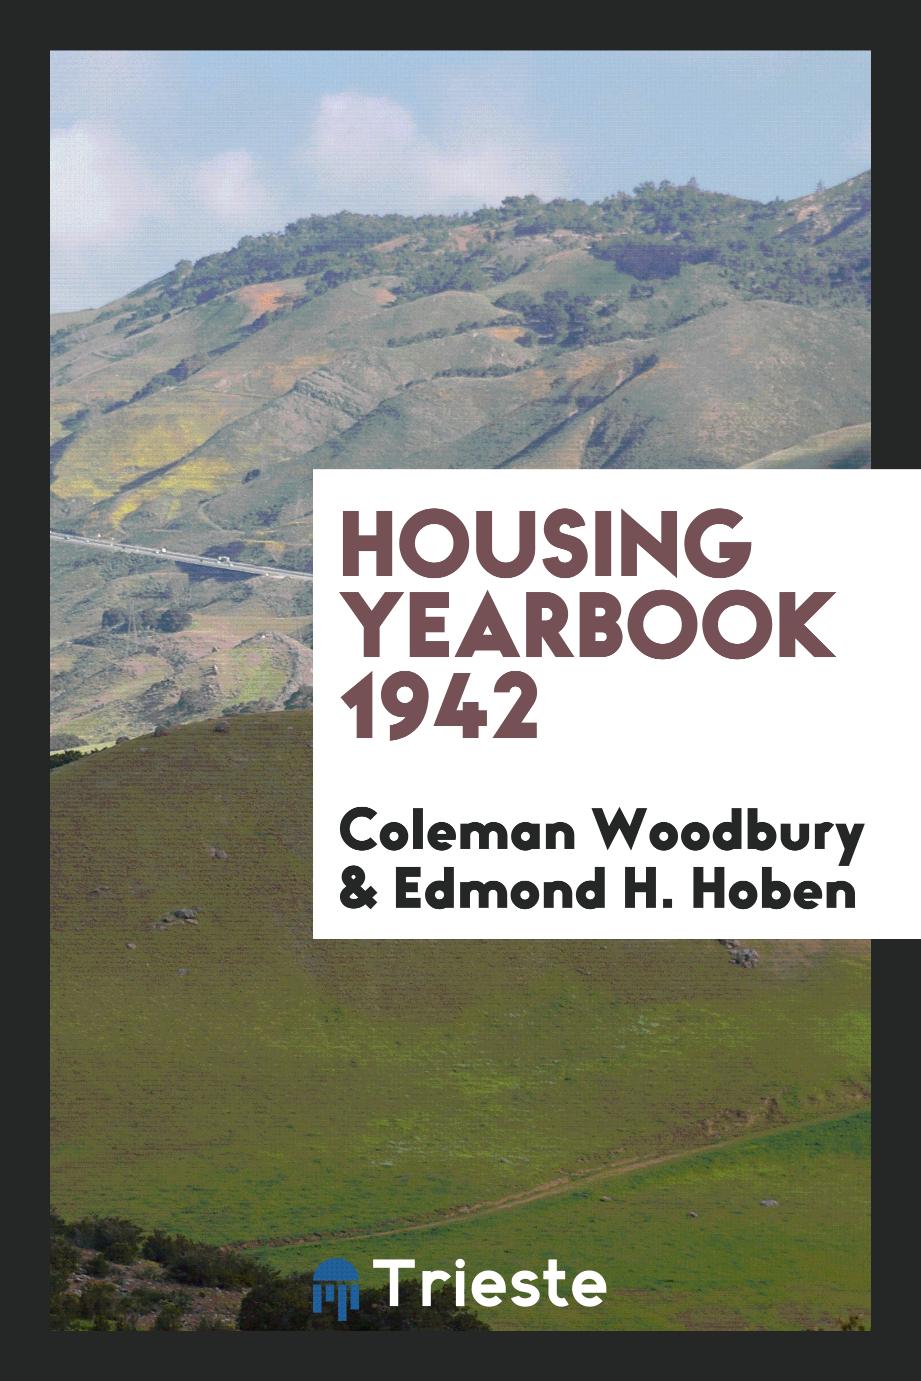 Housing yearbook 1942